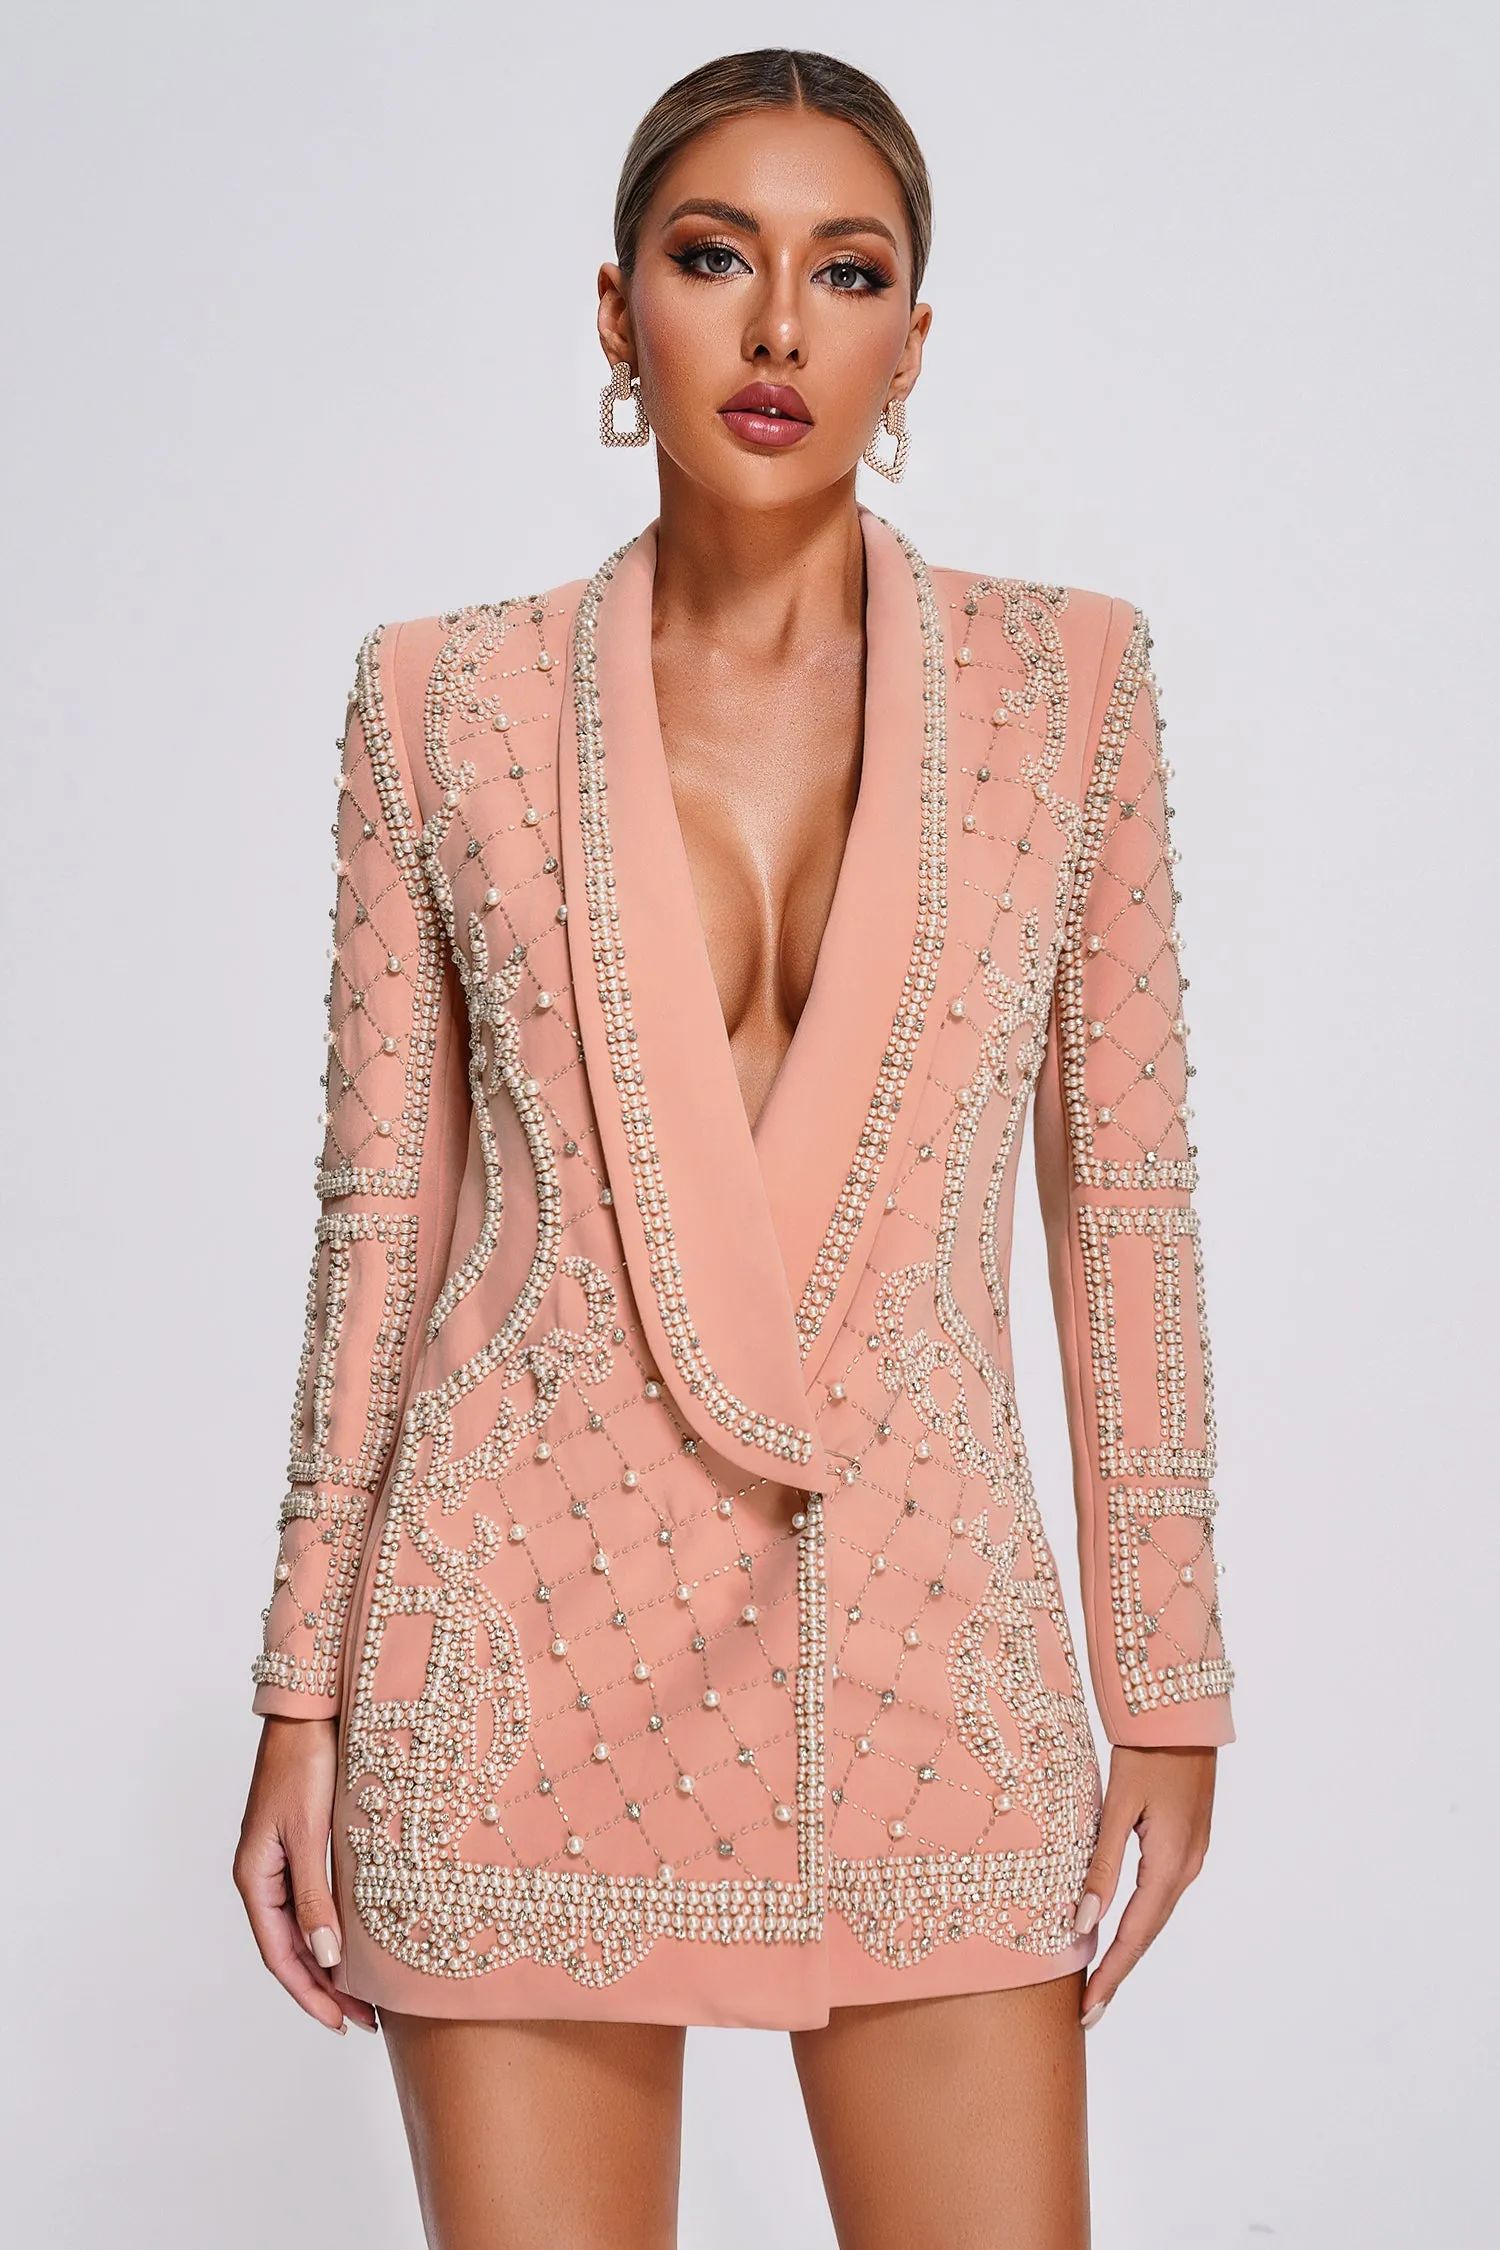 Vioky Pearl Embellished Blazer Dress | Bellabarnett Affiliate Marketing